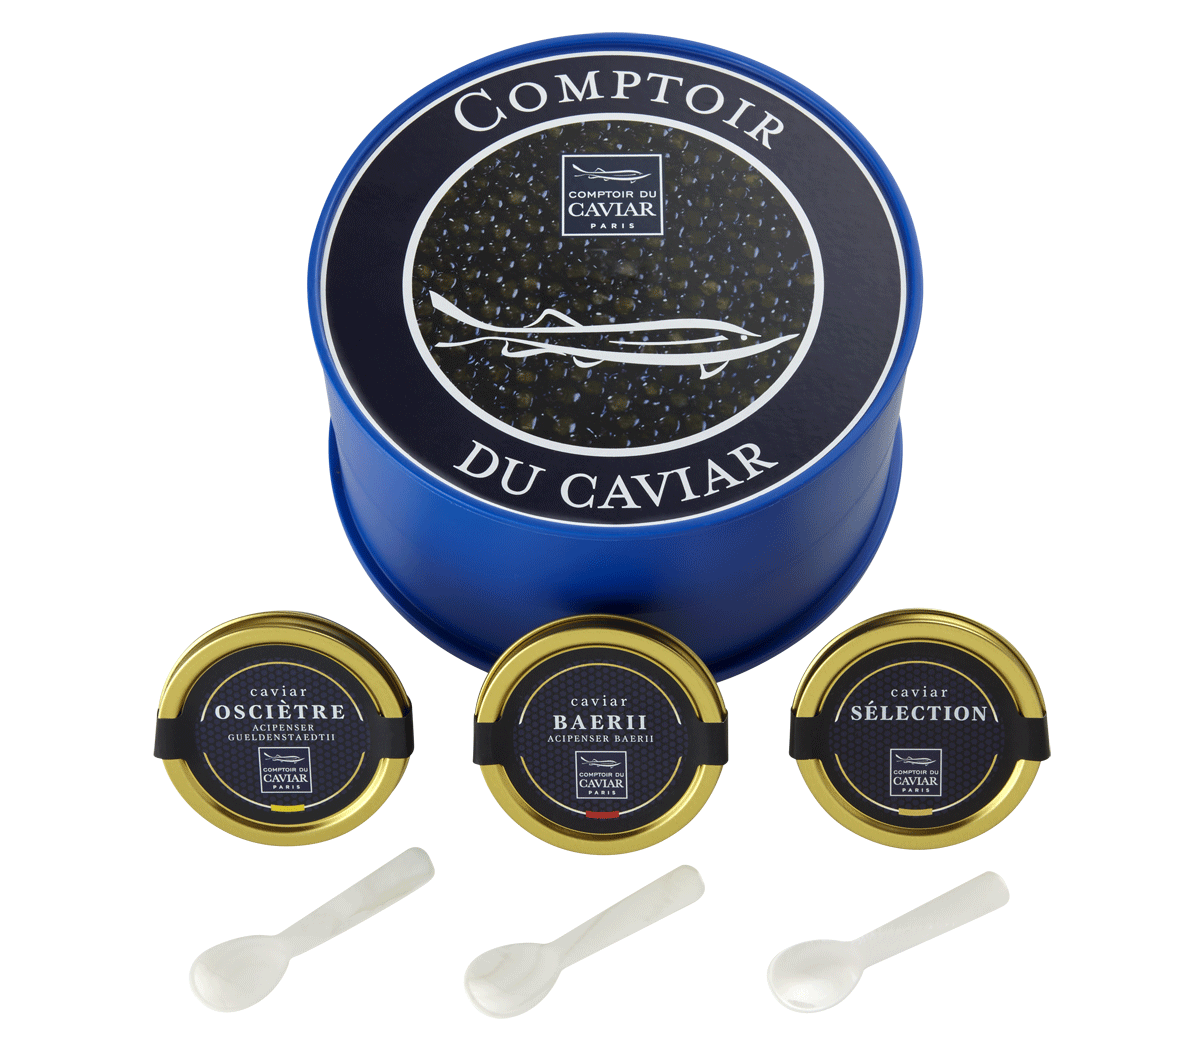 Comptoir du Caviar gift set